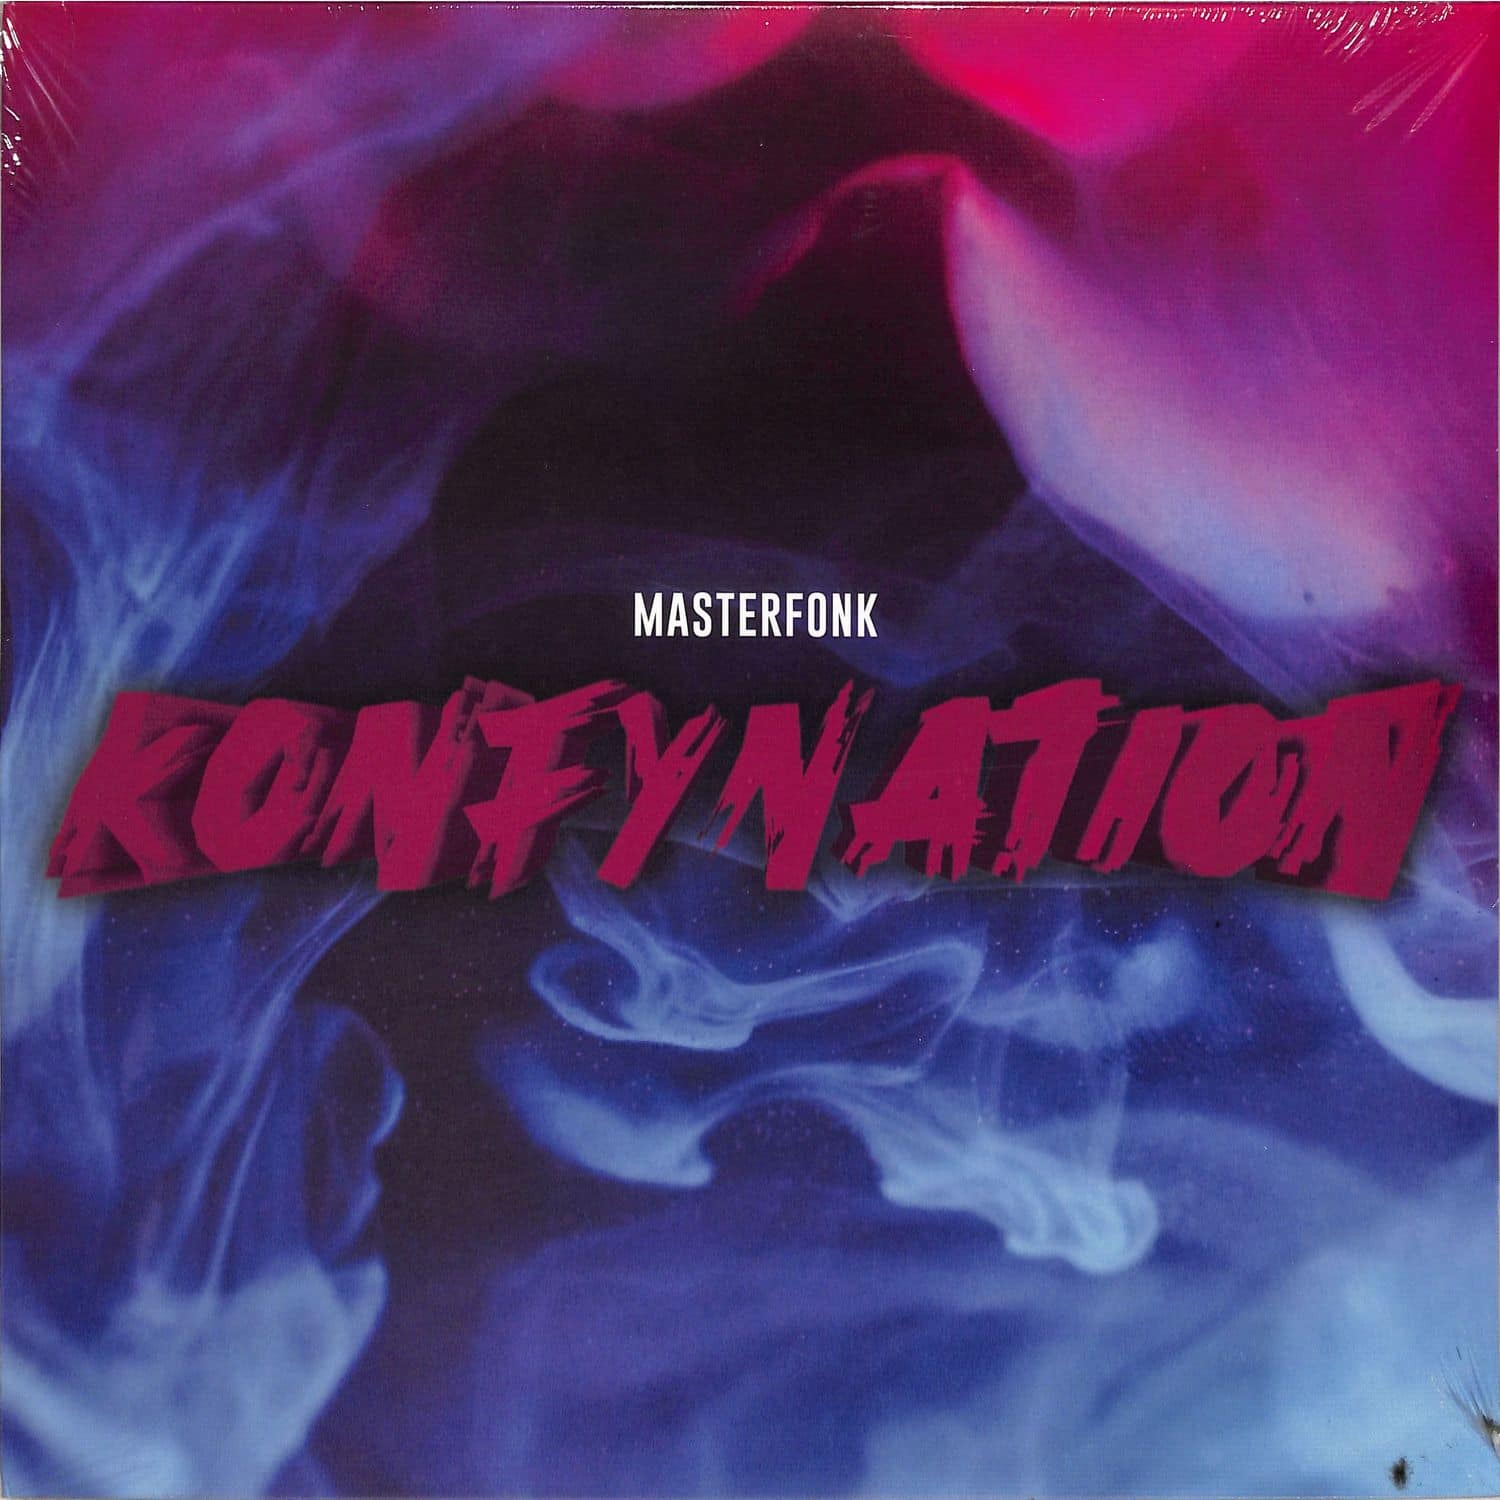 Masterfonk - KONFYNATION I